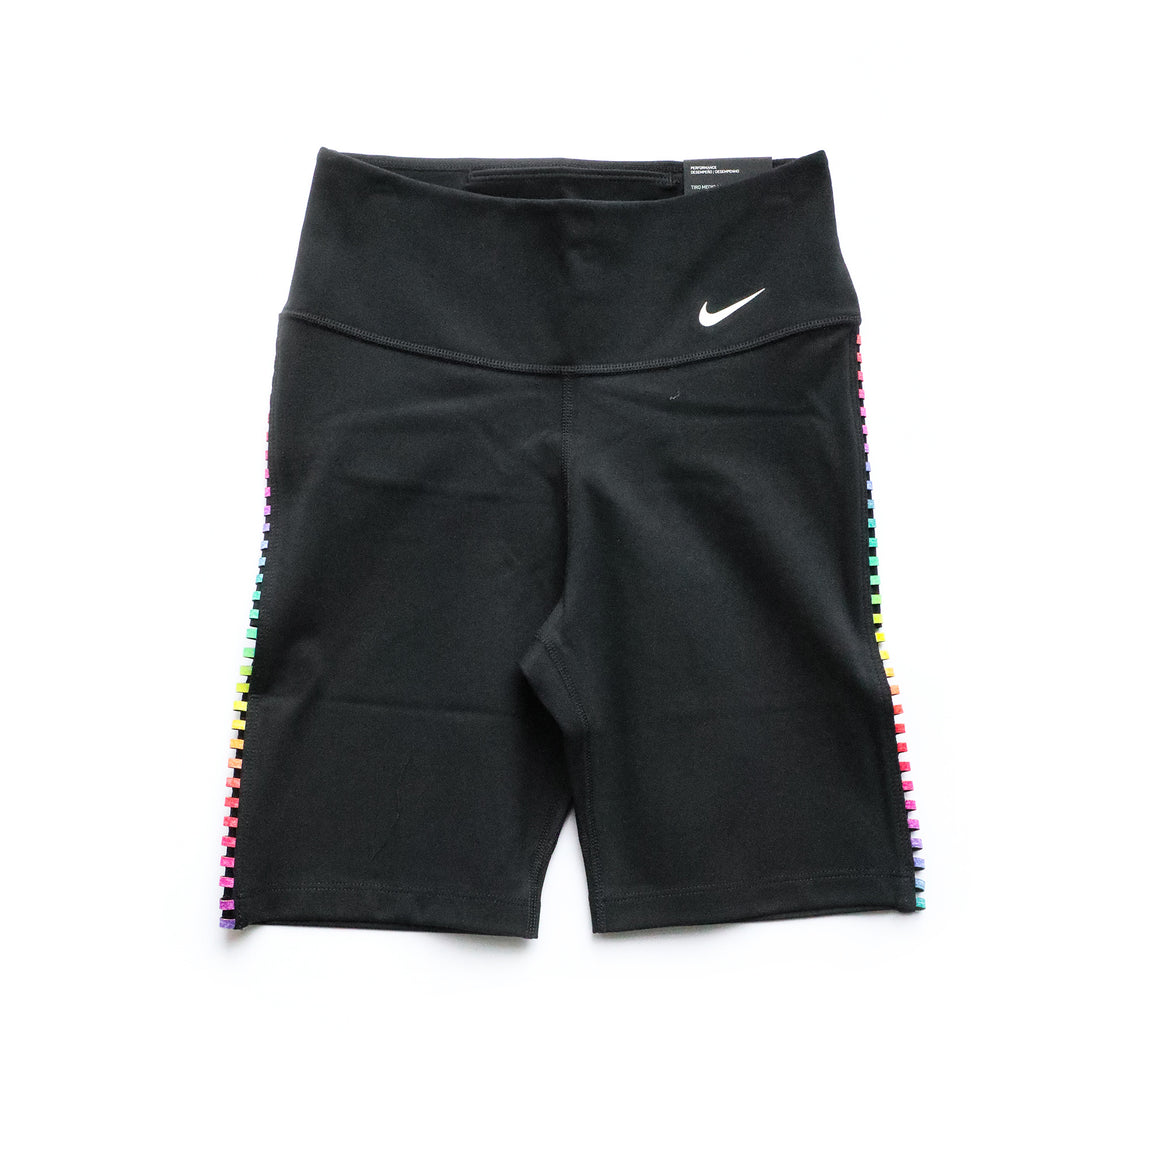 Nike Women's One Rainbow 7-Inch Shorts (Black/Multicolor) - Nike Women's One Rainbow 7-Inch Shorts (Black/Multicolor) - 